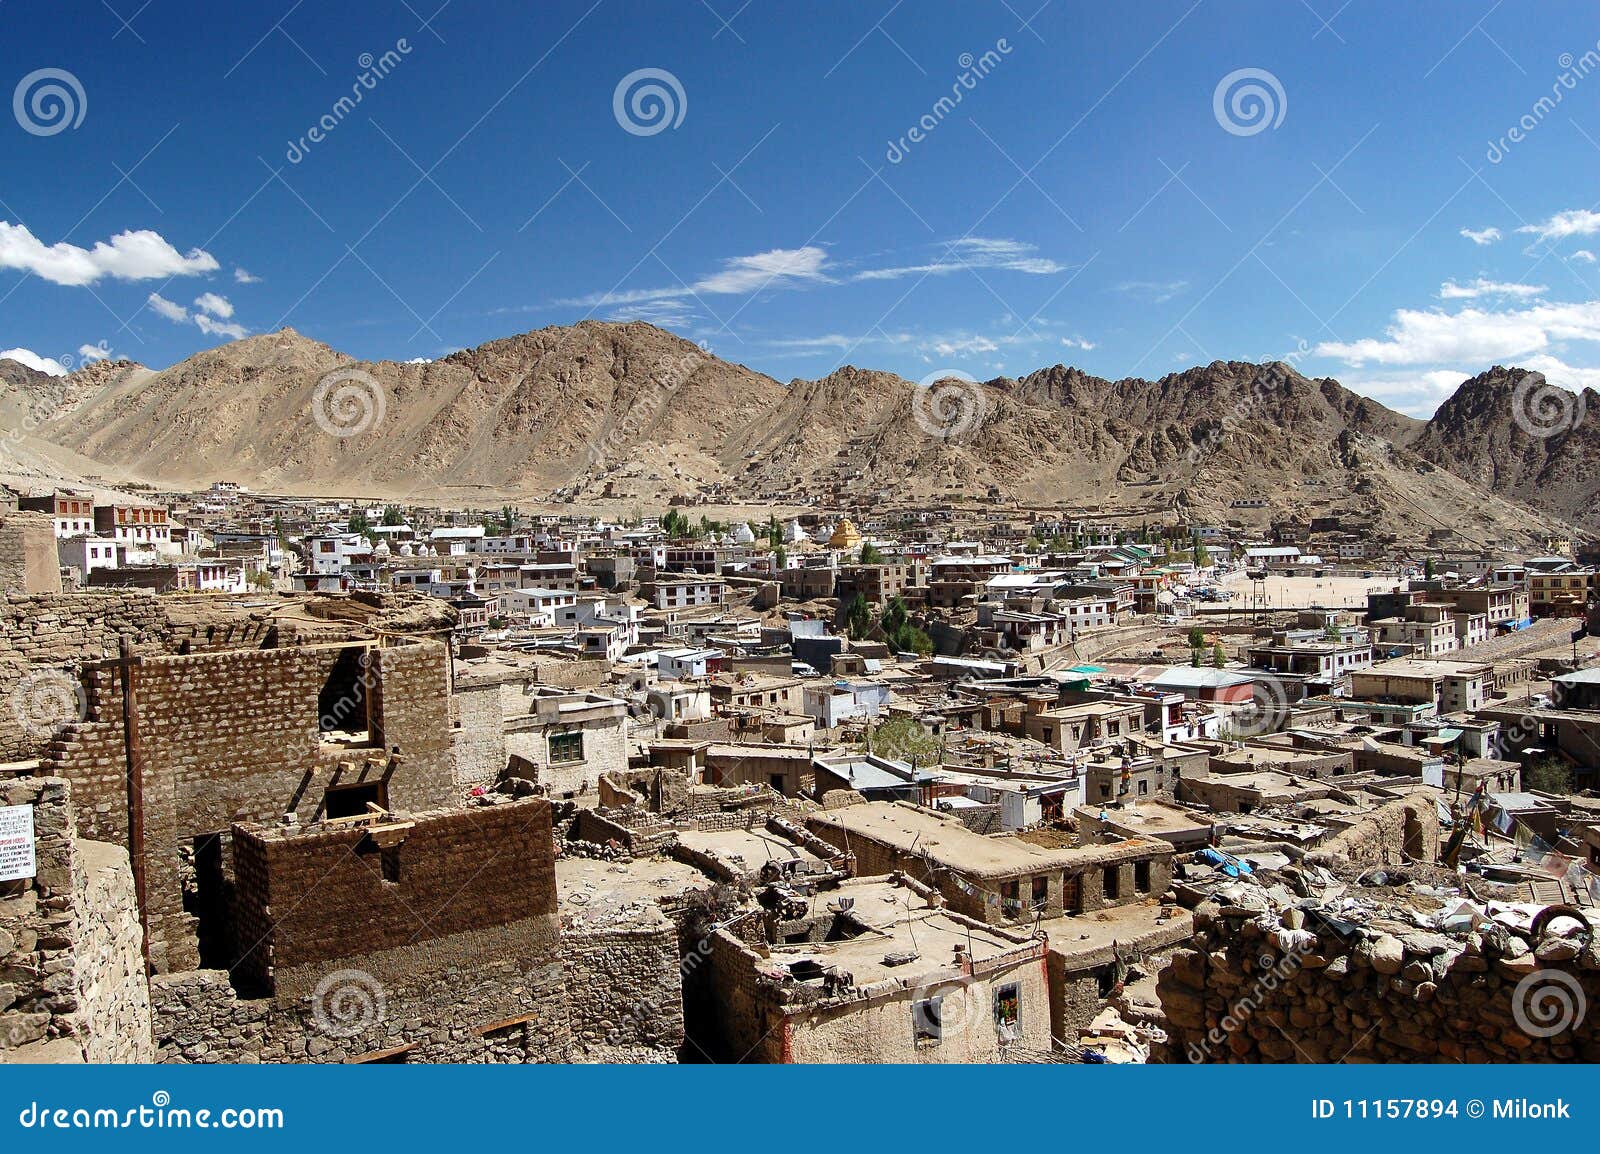 view on leh (ladakh)